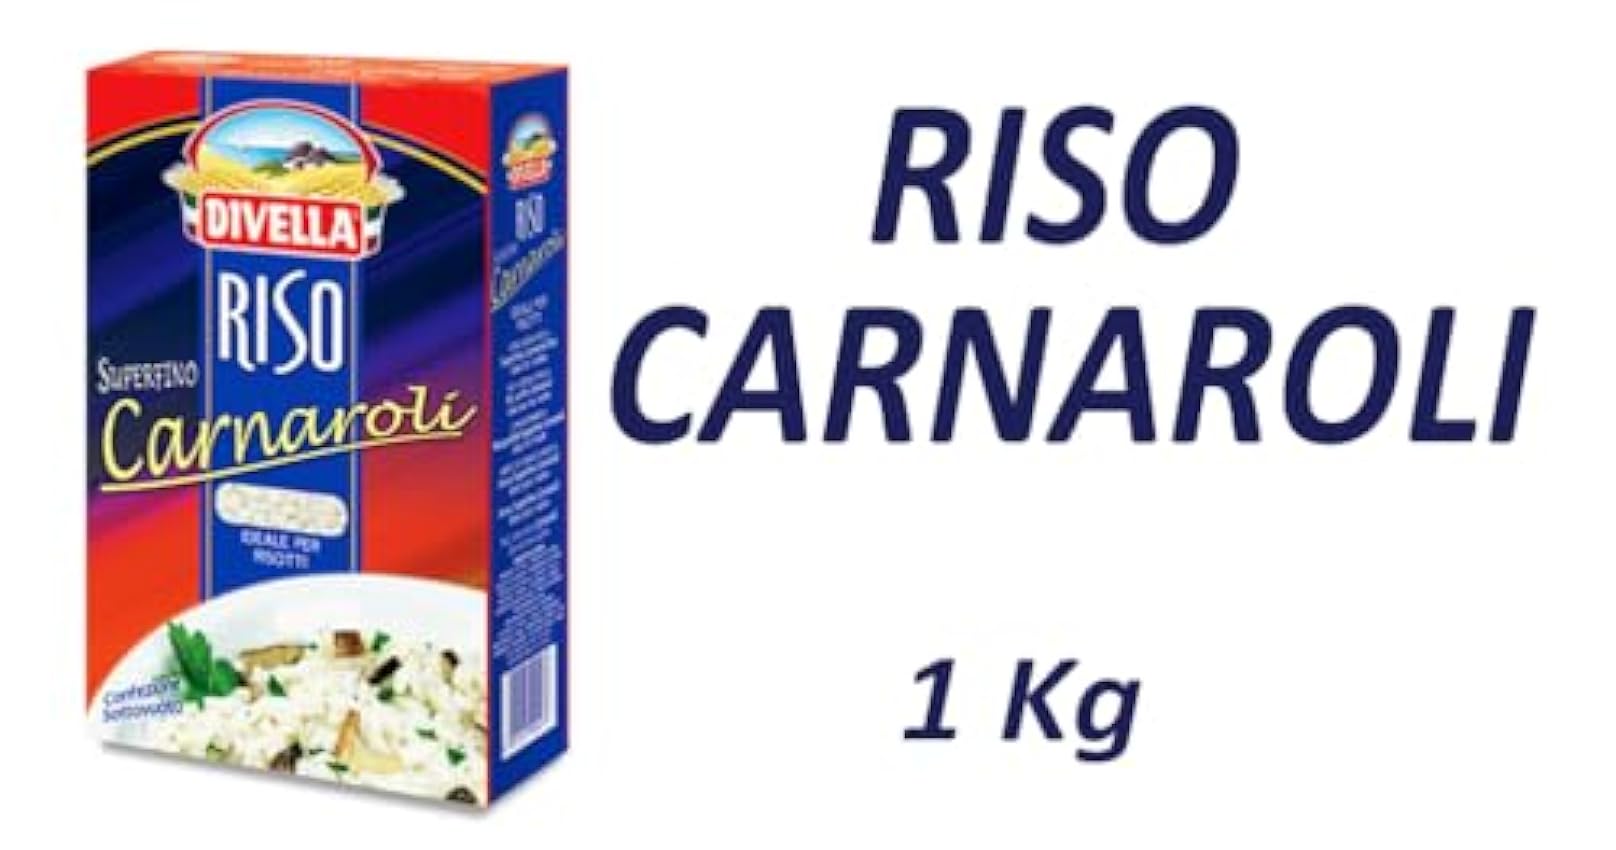 Divella Riz Riso Carnaroli Lot de 10 grains de riz super fins, idéal pour les risottos, emballage sous vide de 1 kg + 1 sachet de talc Felce Azzurra gratuit, sachet de 100 g mB5jVb73